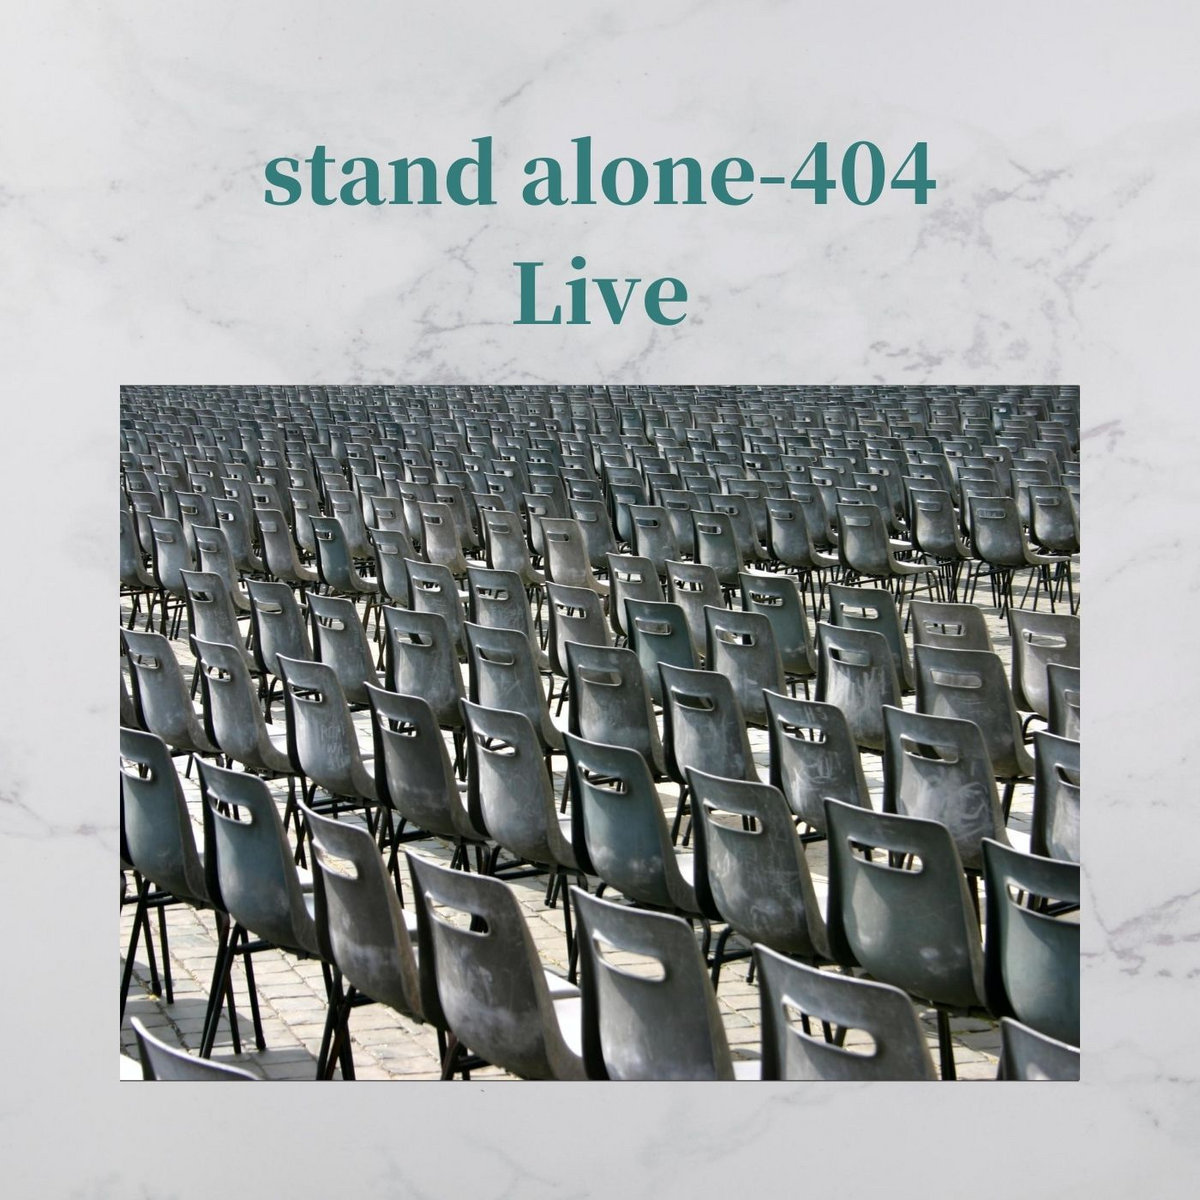 stand alone-404 Live